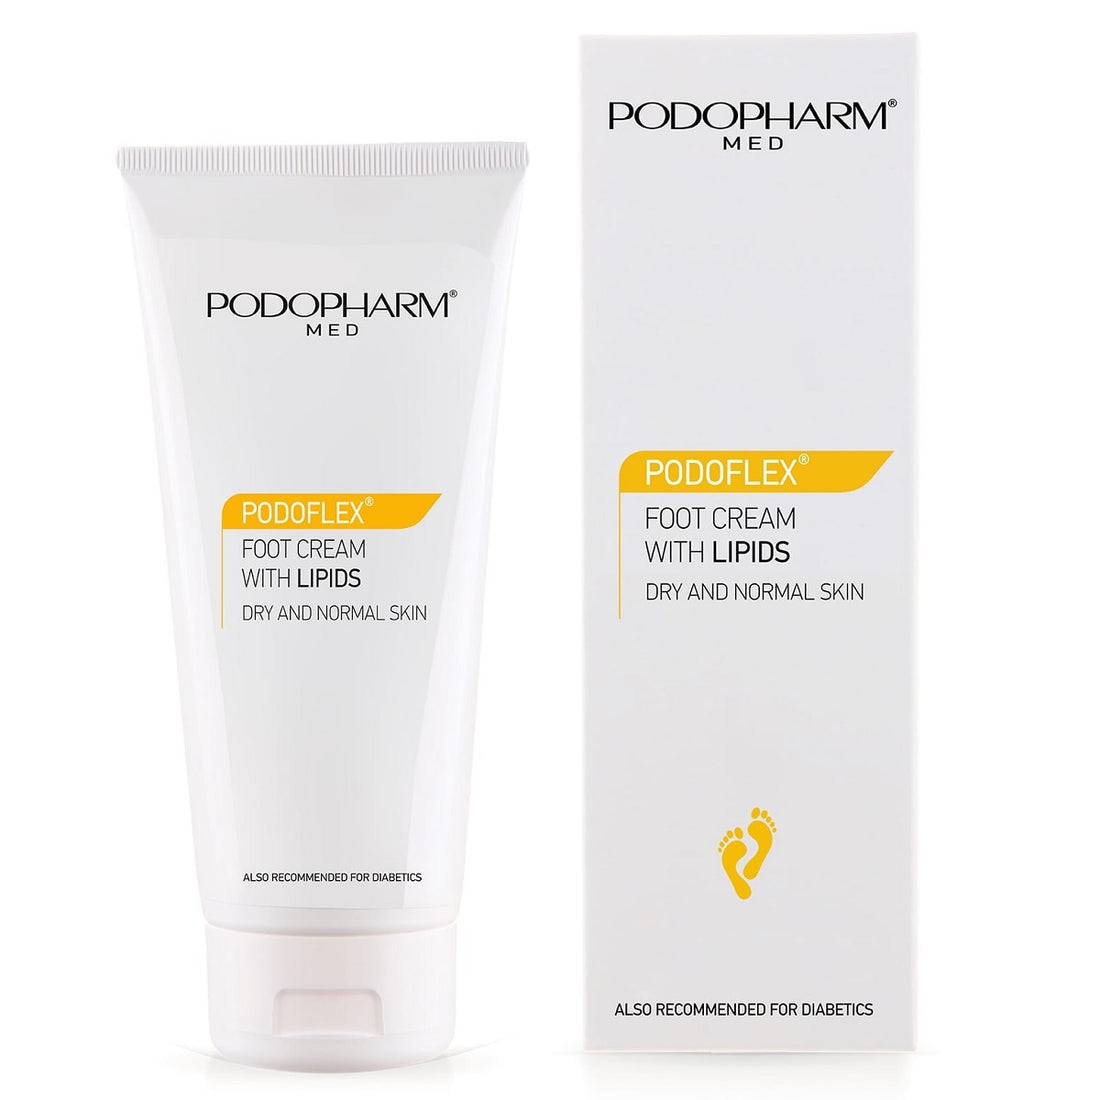 Podopharm Med Podoflex Foot Cream With Lipids Dry And Normal Skin 75ml Podopharm